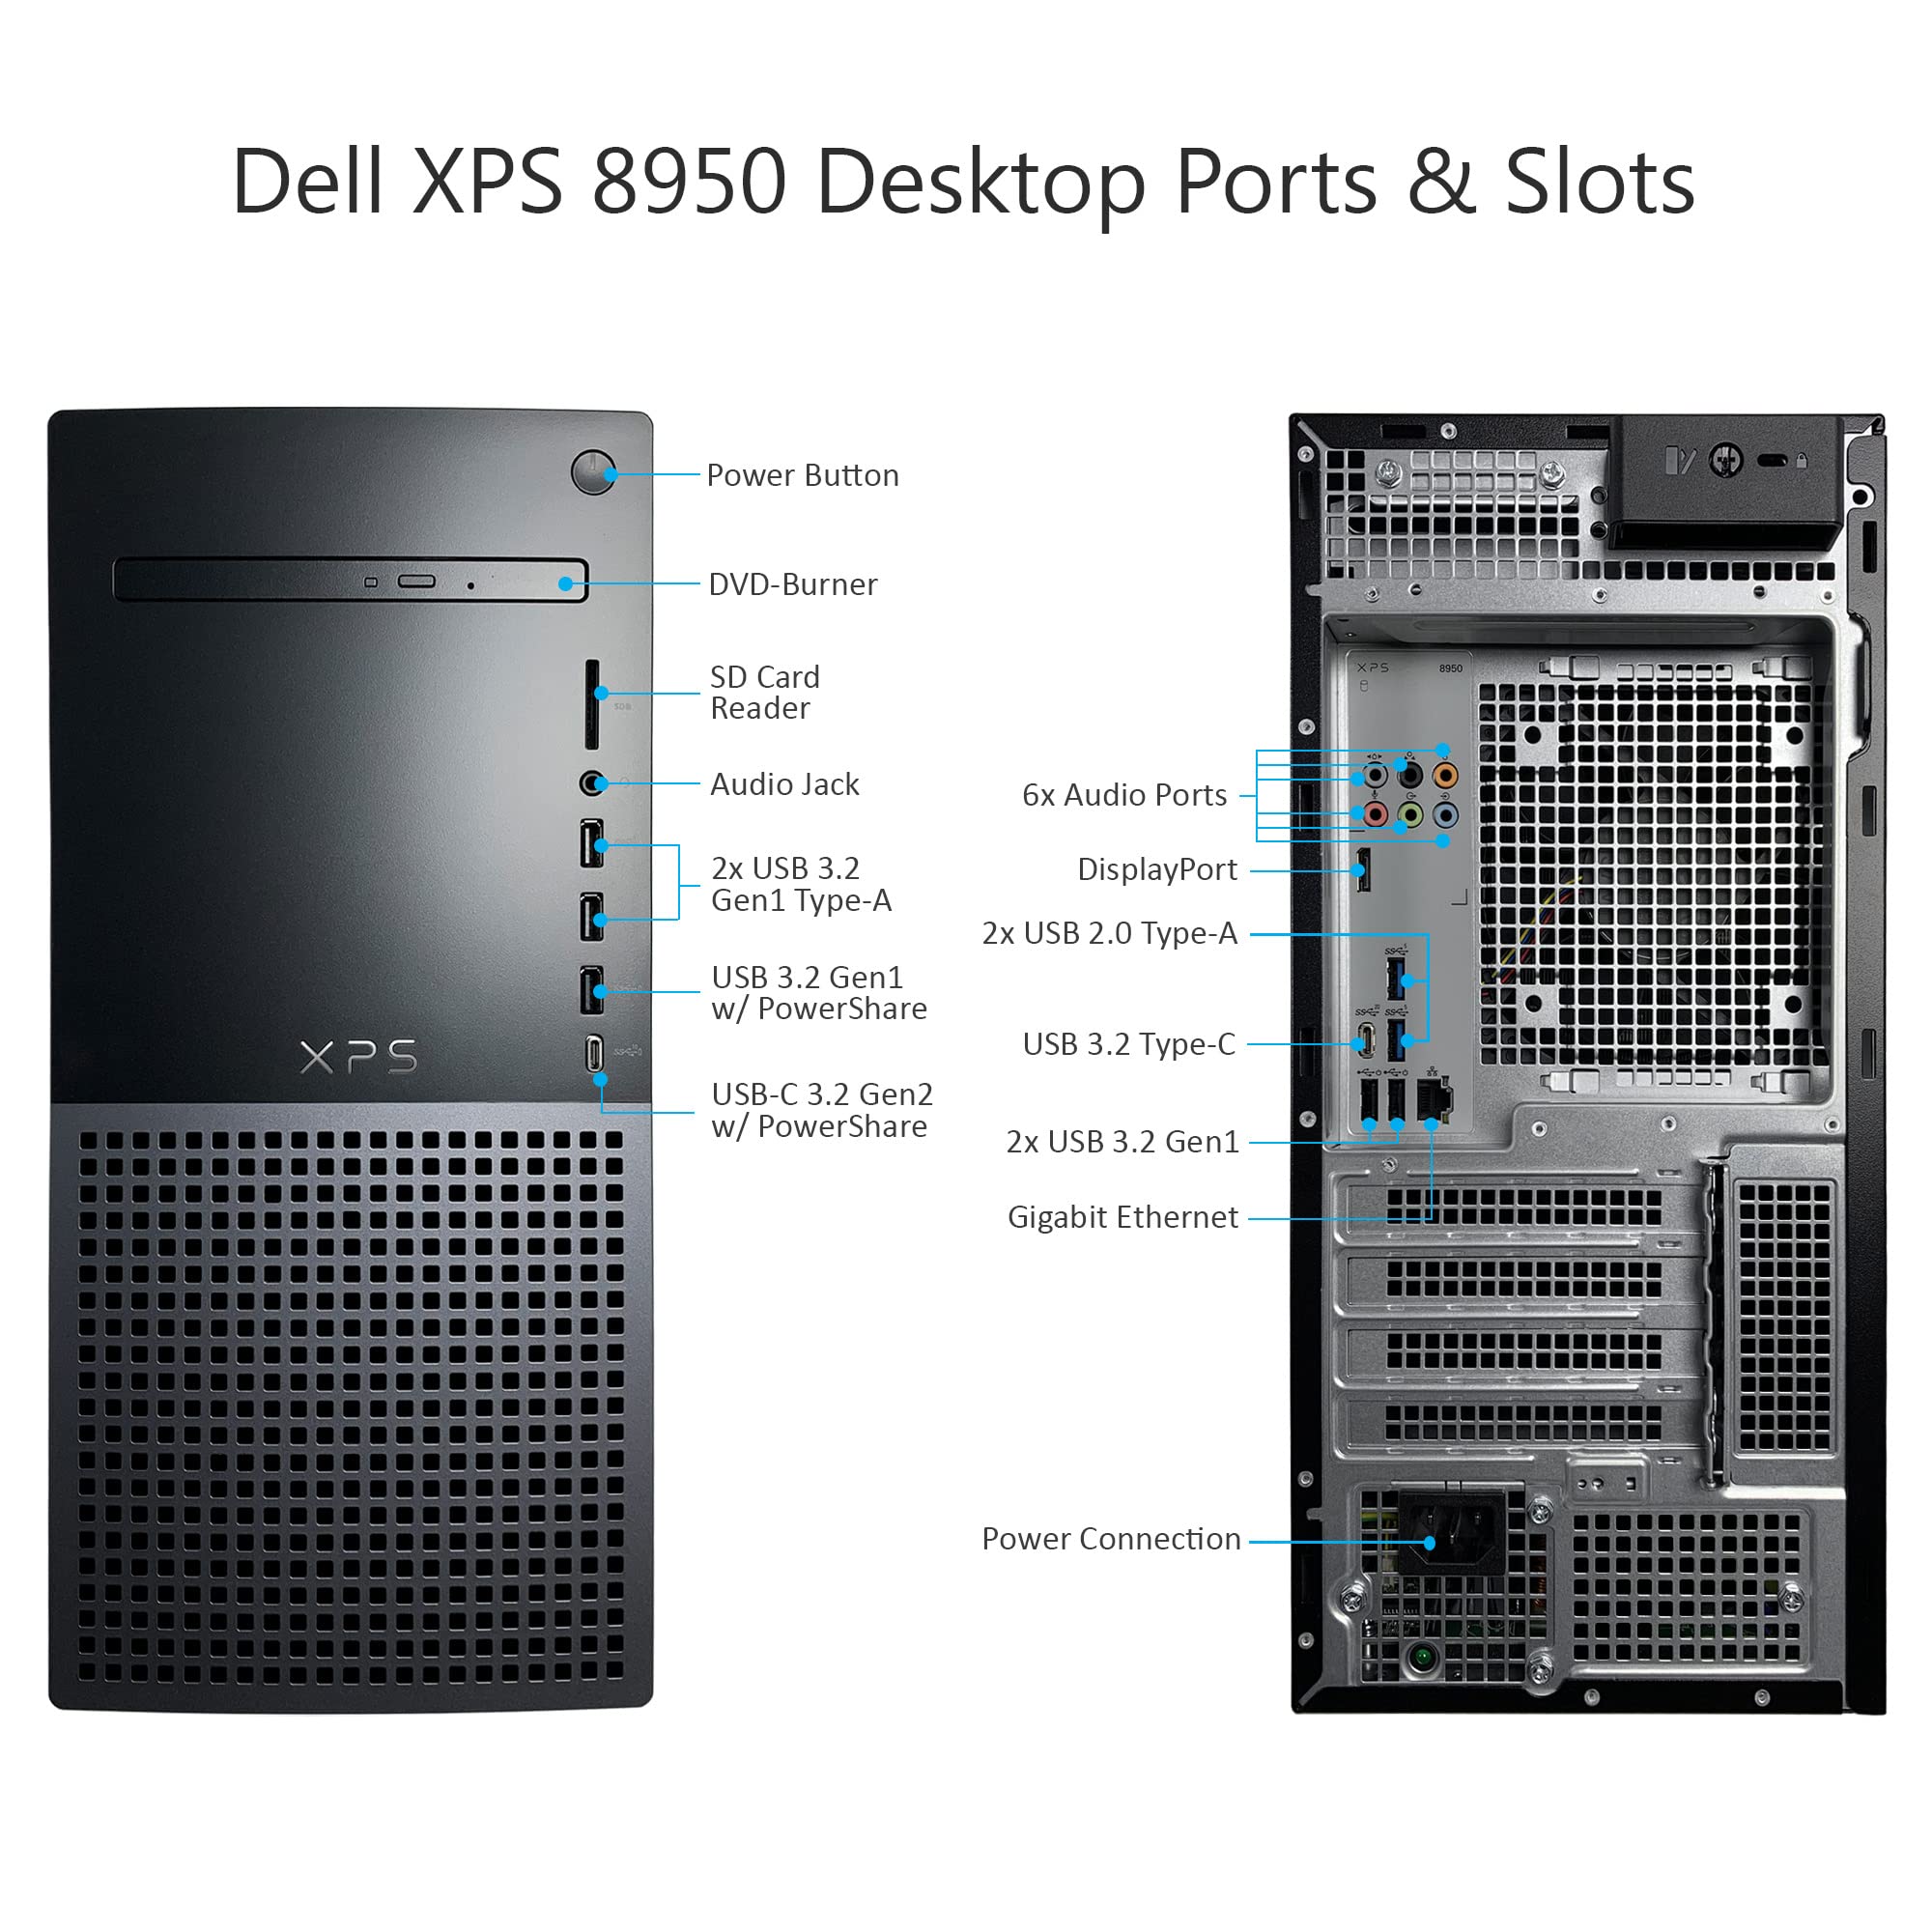 Dell XPS 8950 Desktop Computer - 12th Gen Intel Core i7-12700K up to 5.0 GHz CPU, 16GB DDR5 RAM, 1TB NVMe SSD + 2TB HDD, Intel UHD Graphics 770, Killer Wi-Fi 6, DVD Burner, Windows 11 Home